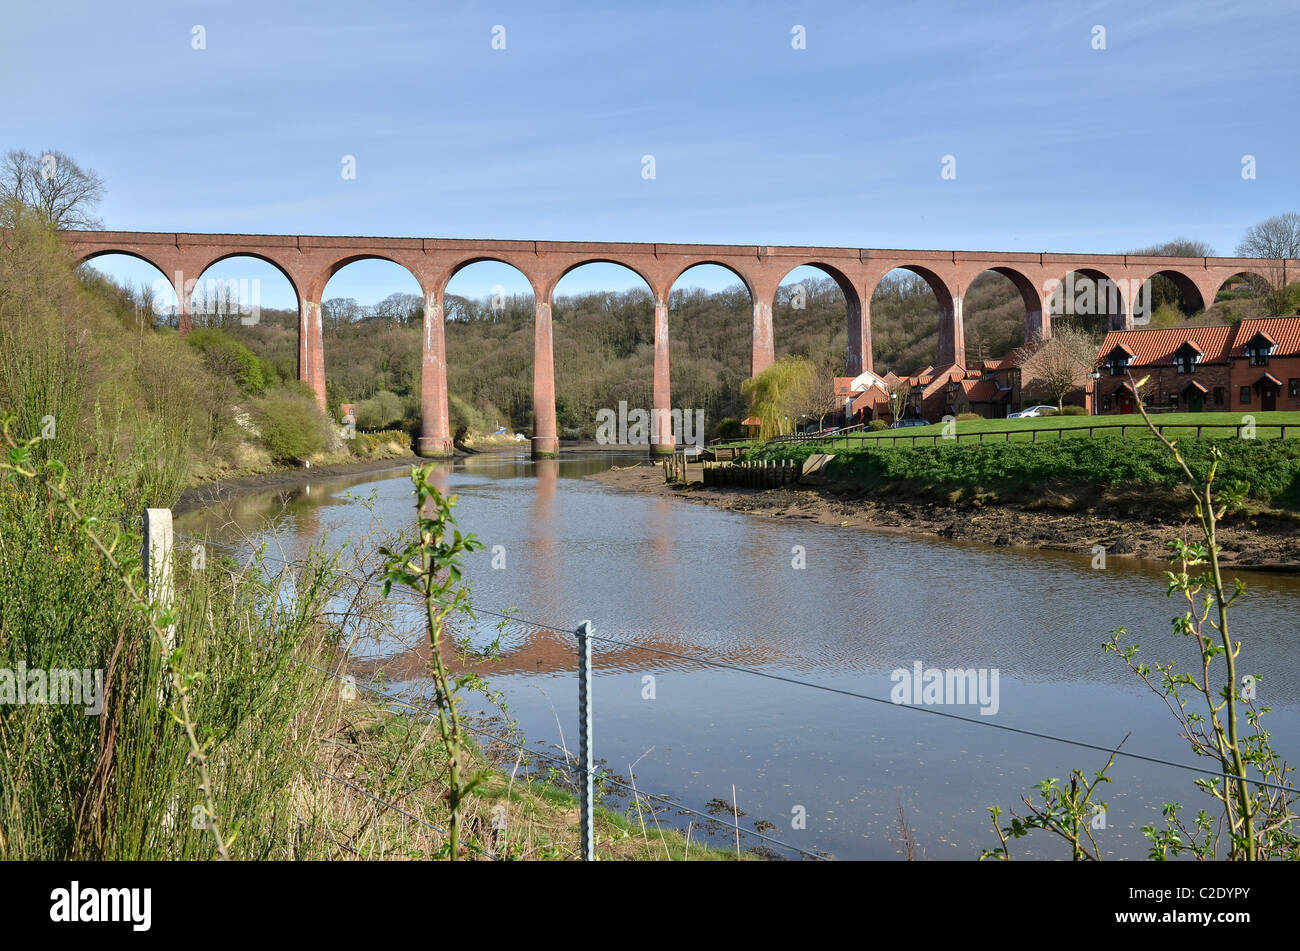 Larpool Railway Viaduct at Whitby, North Yorkshire, UK. Stock Photo